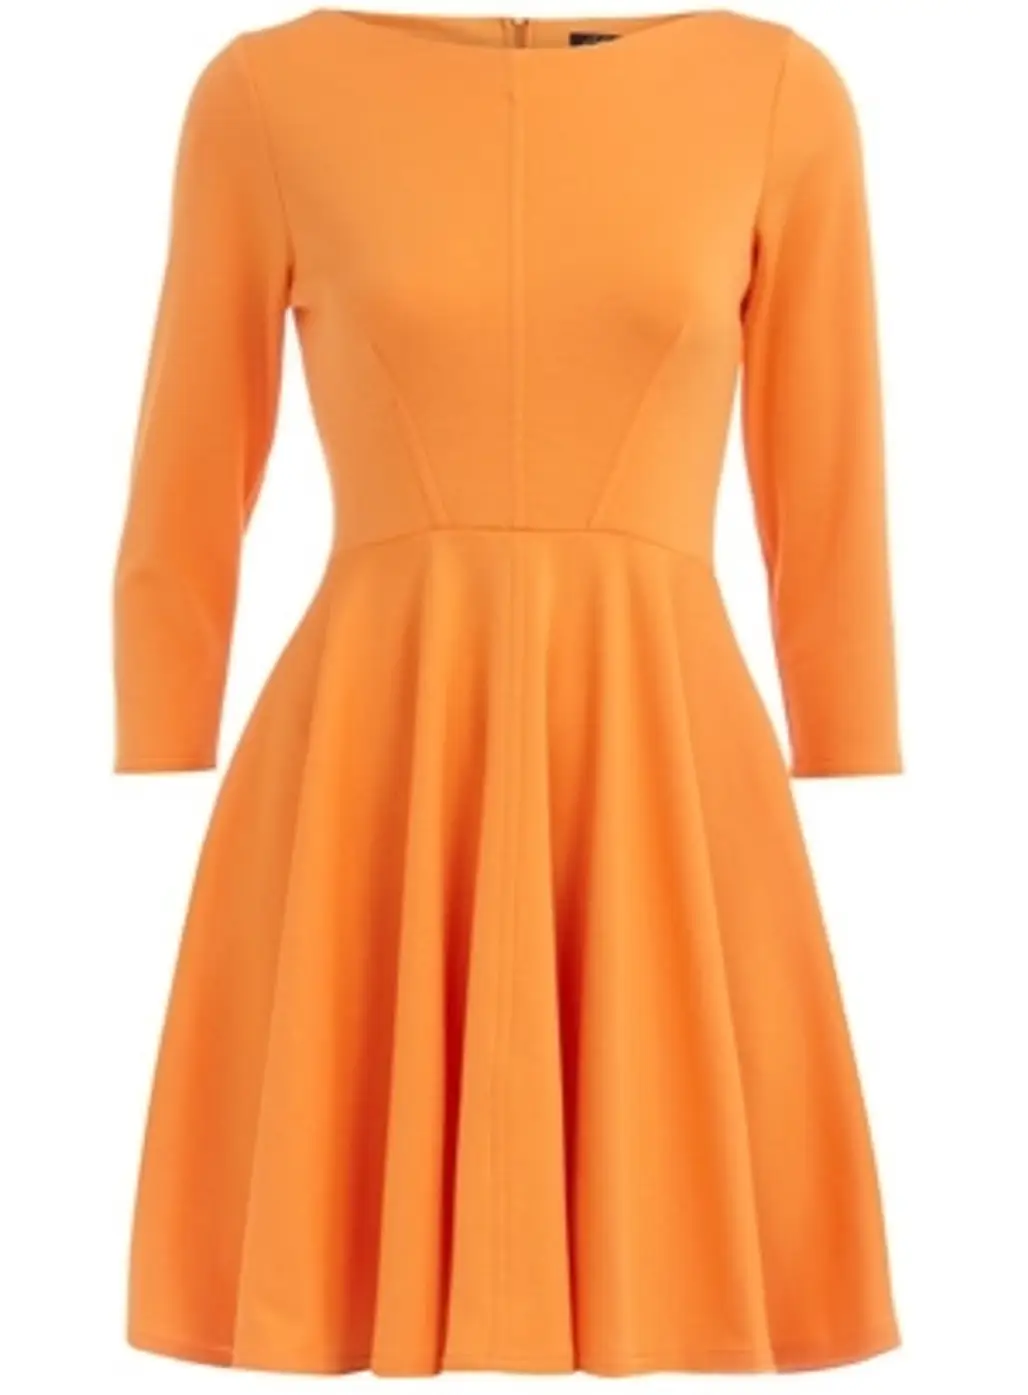 Dorothy Perkins Orange Fit and Flare Dress